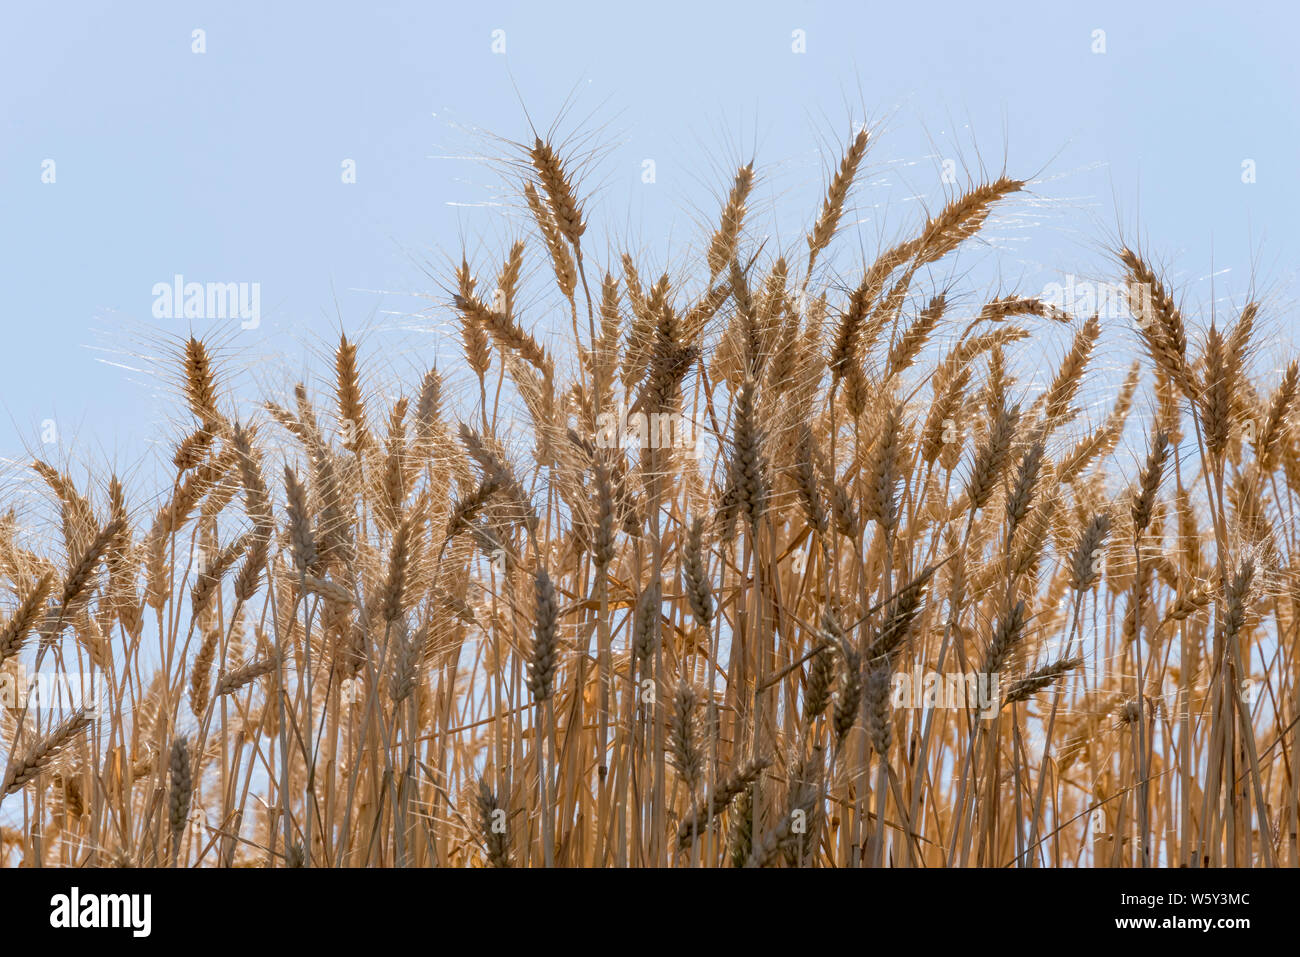 Closeup of a mature wheat crop against a blue sky Stock Photo